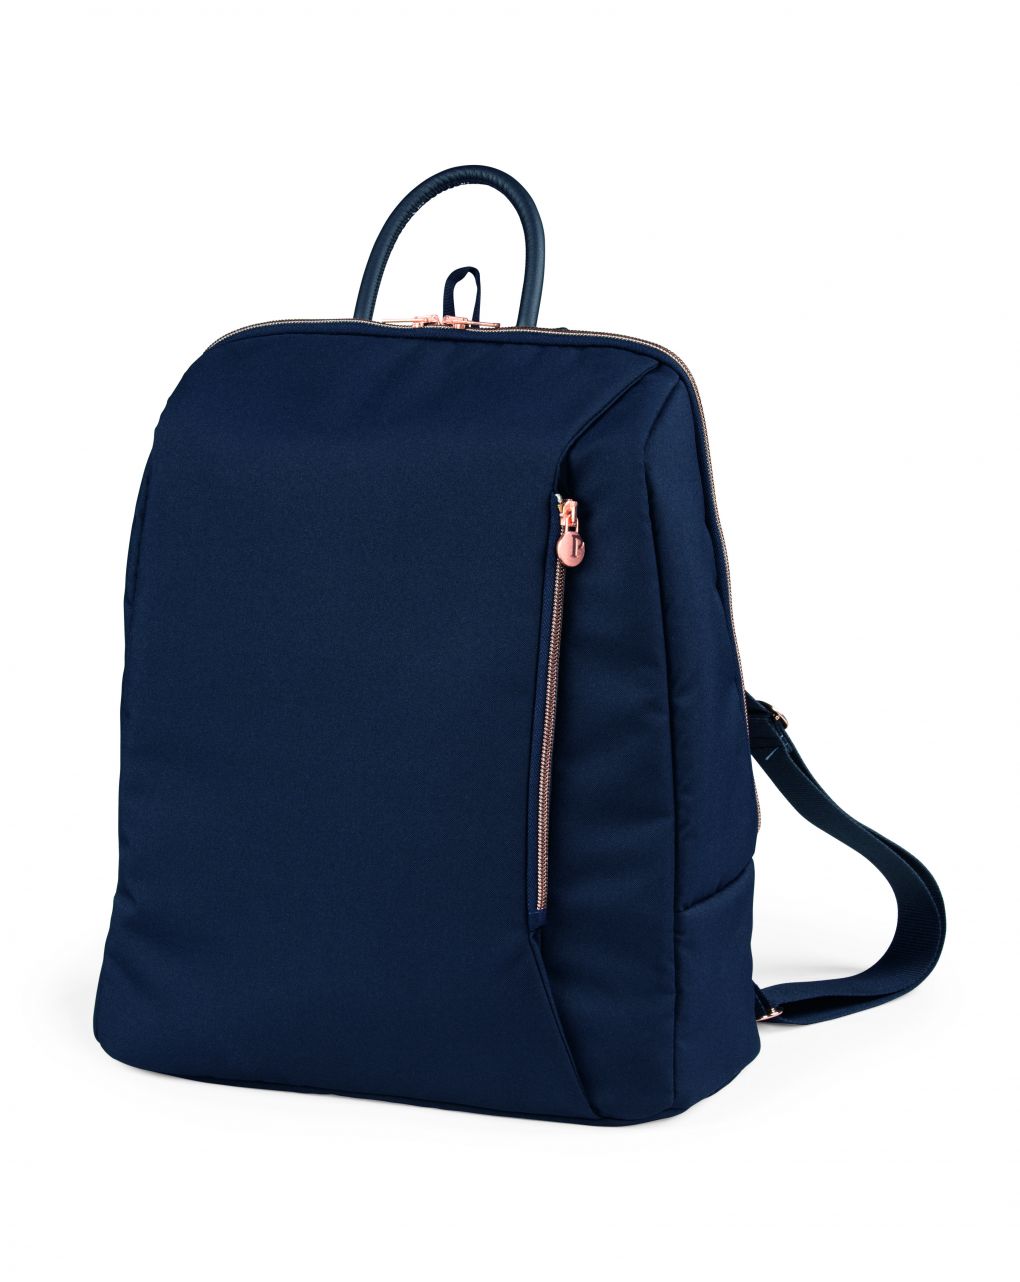 Backpack blue shine - Peg-Pérego